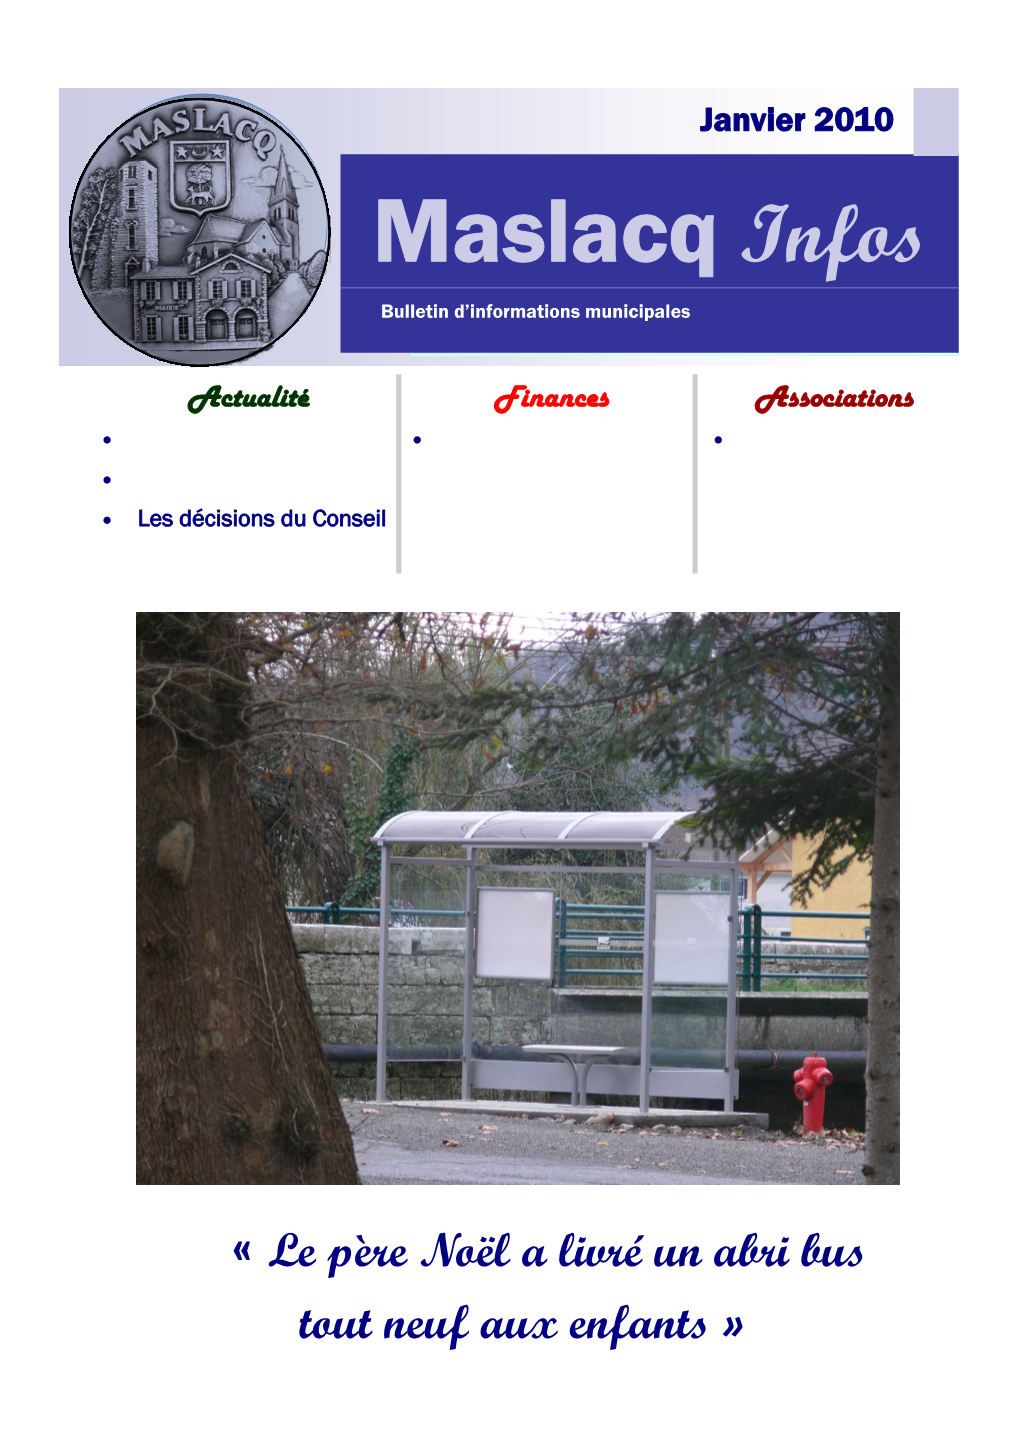 Maslacq Infos Bulletinbulletin D’Informations D’Informations Municipales Municipales